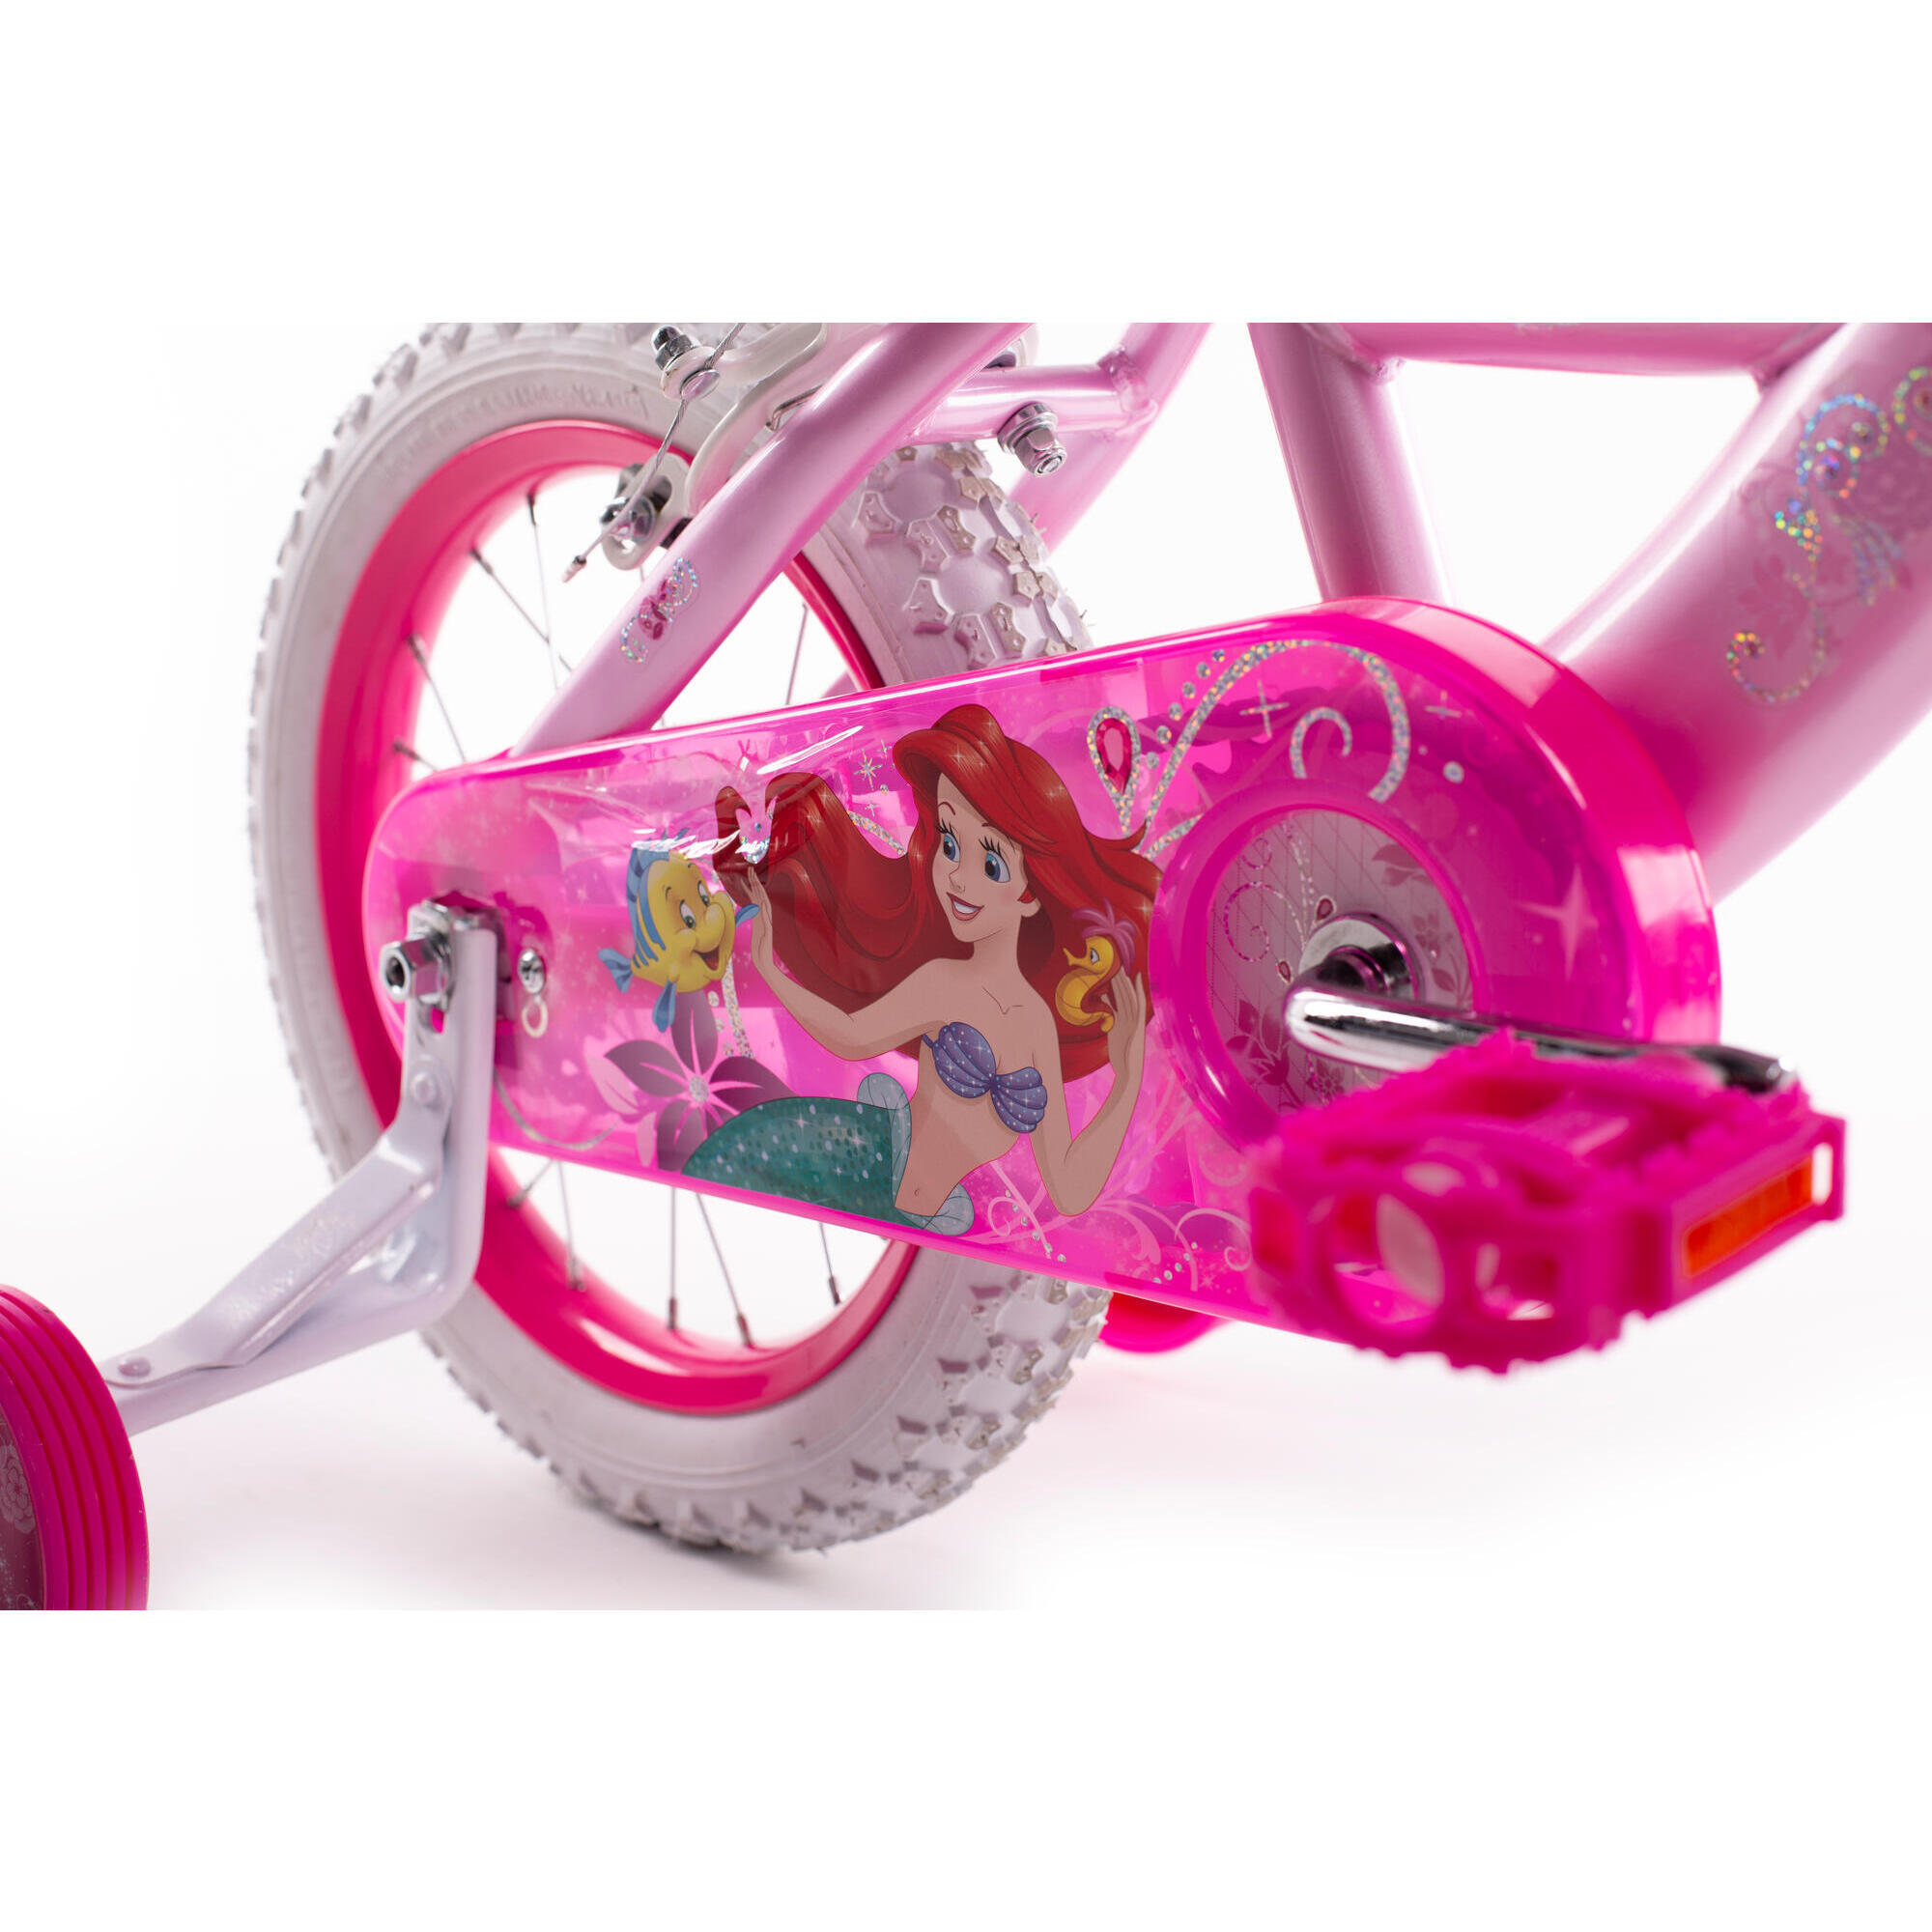 Huffy Disney Princess Girls Bike Pink 52499 for sale online 